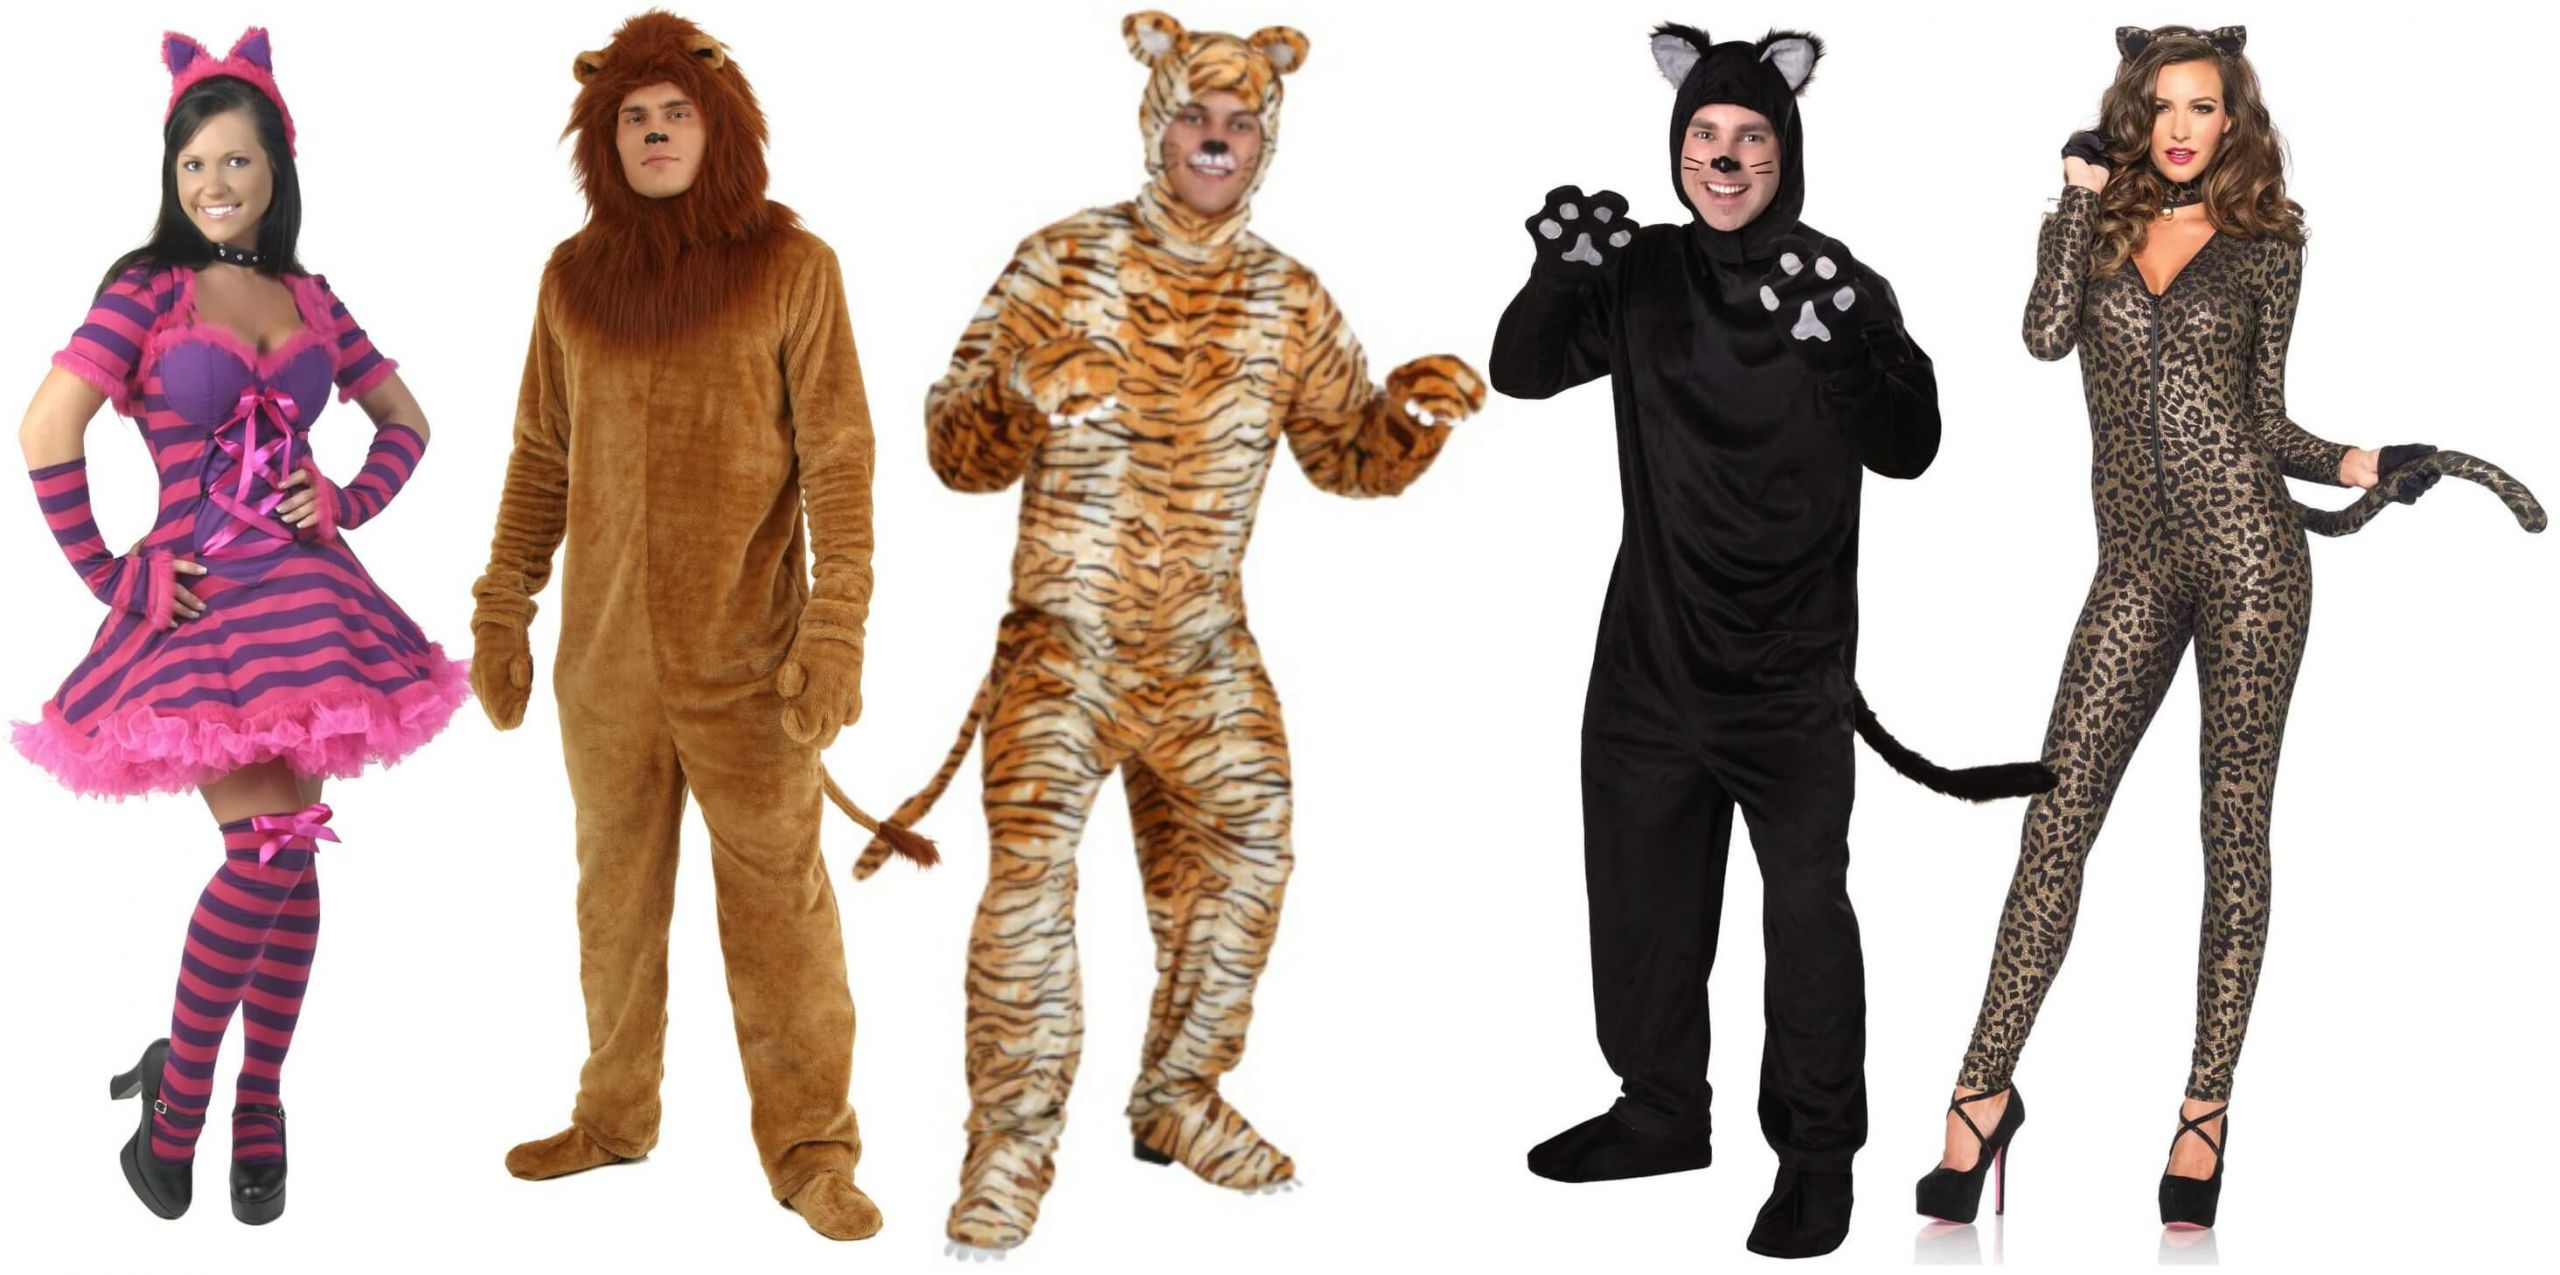 Party Halloween Costumes Ideas
 Costume Ideas for the Party Animals Halloween Costumes Blog